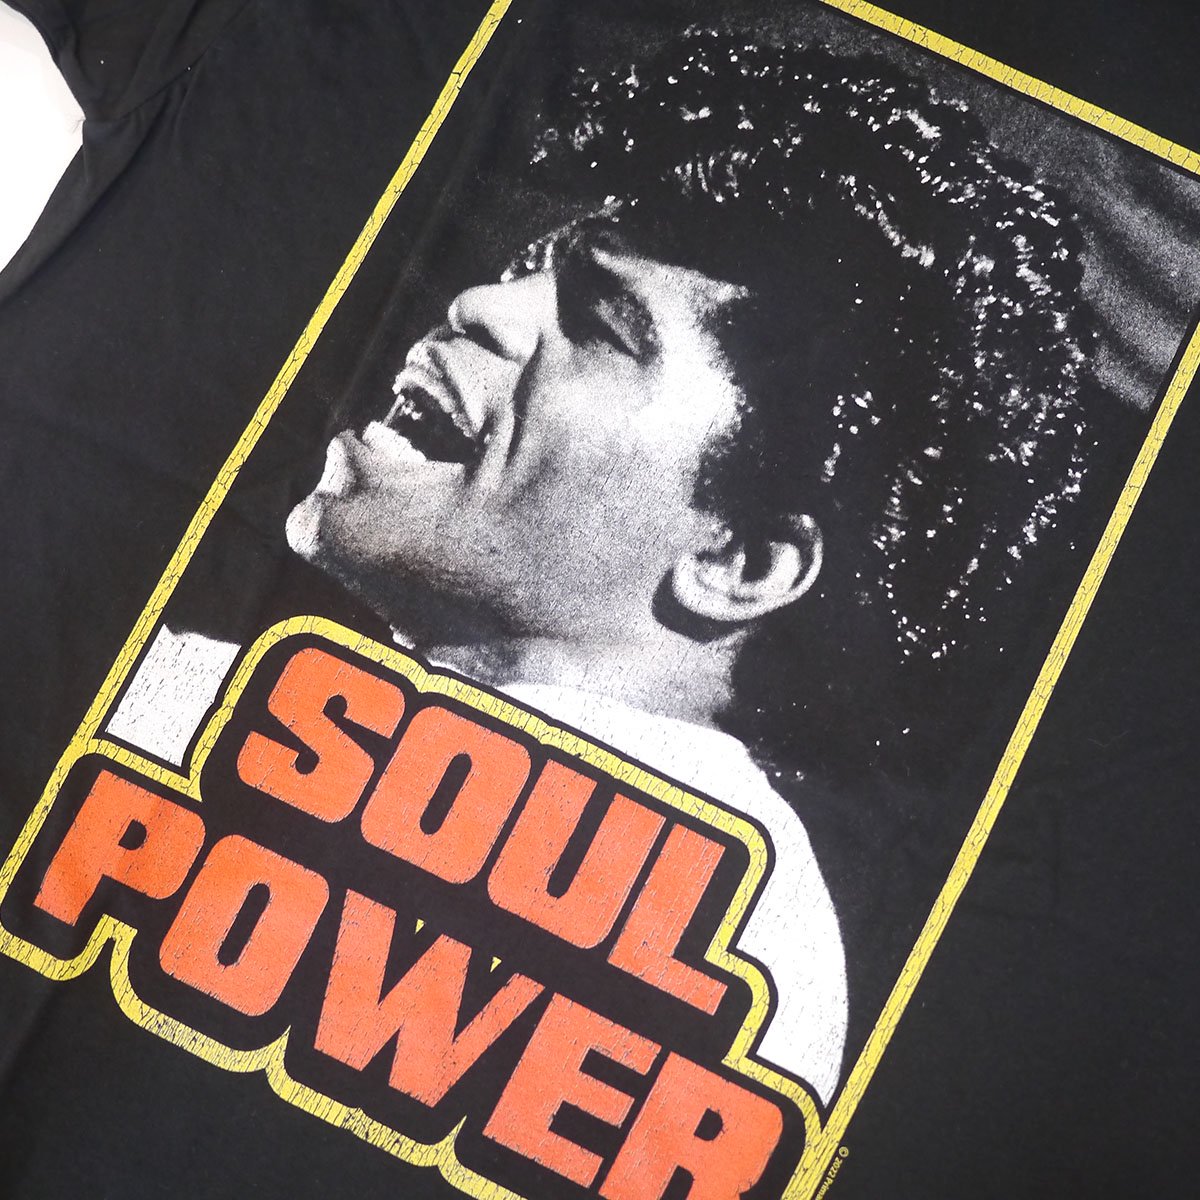 SOUL FUNK Tシャツ -JAMES BROWN (ジェームス ブラウン)Tシャツ-Fedup.jp 店舗販売 通販